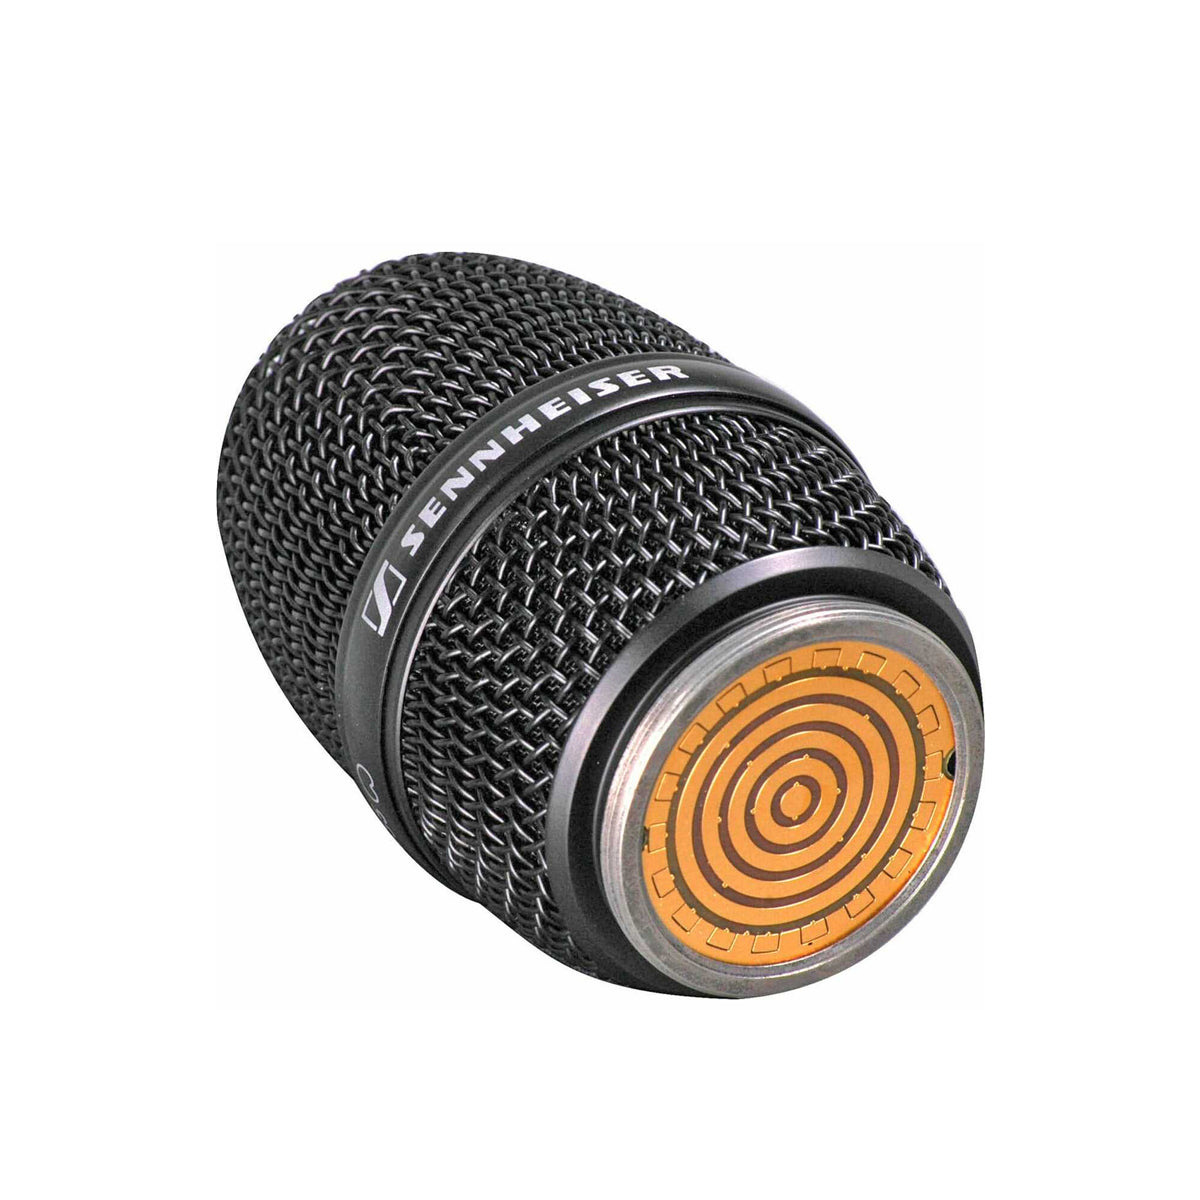 Sennheiser MME 865-1 BK Condenser Super Cardioid Microphone Capsule Black